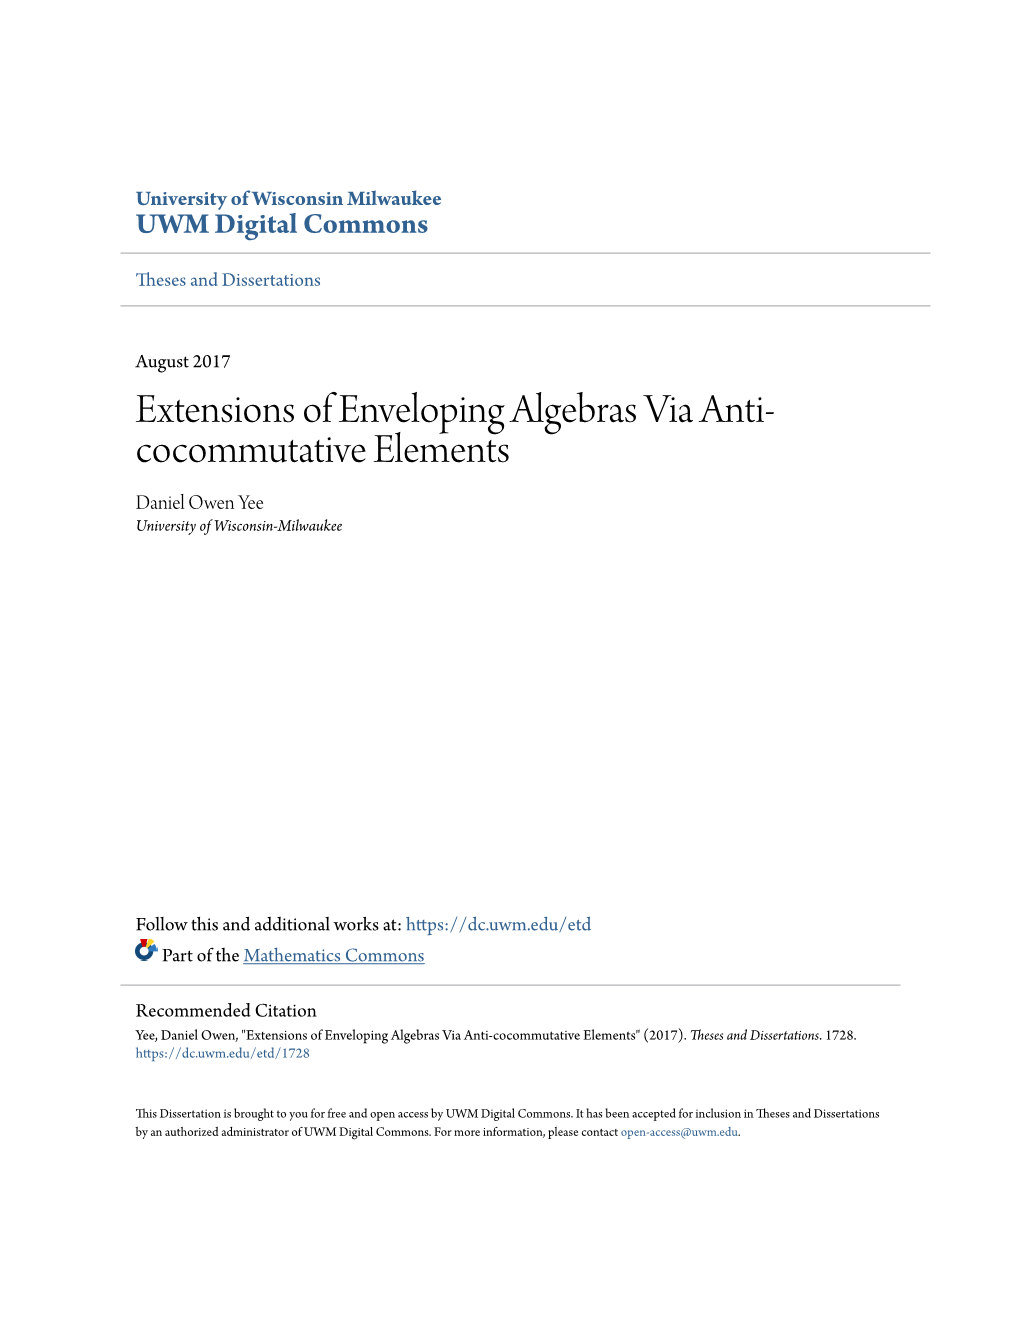 Extensions of Enveloping Algebras Via Anti-Cocommutative Elements" (2017)